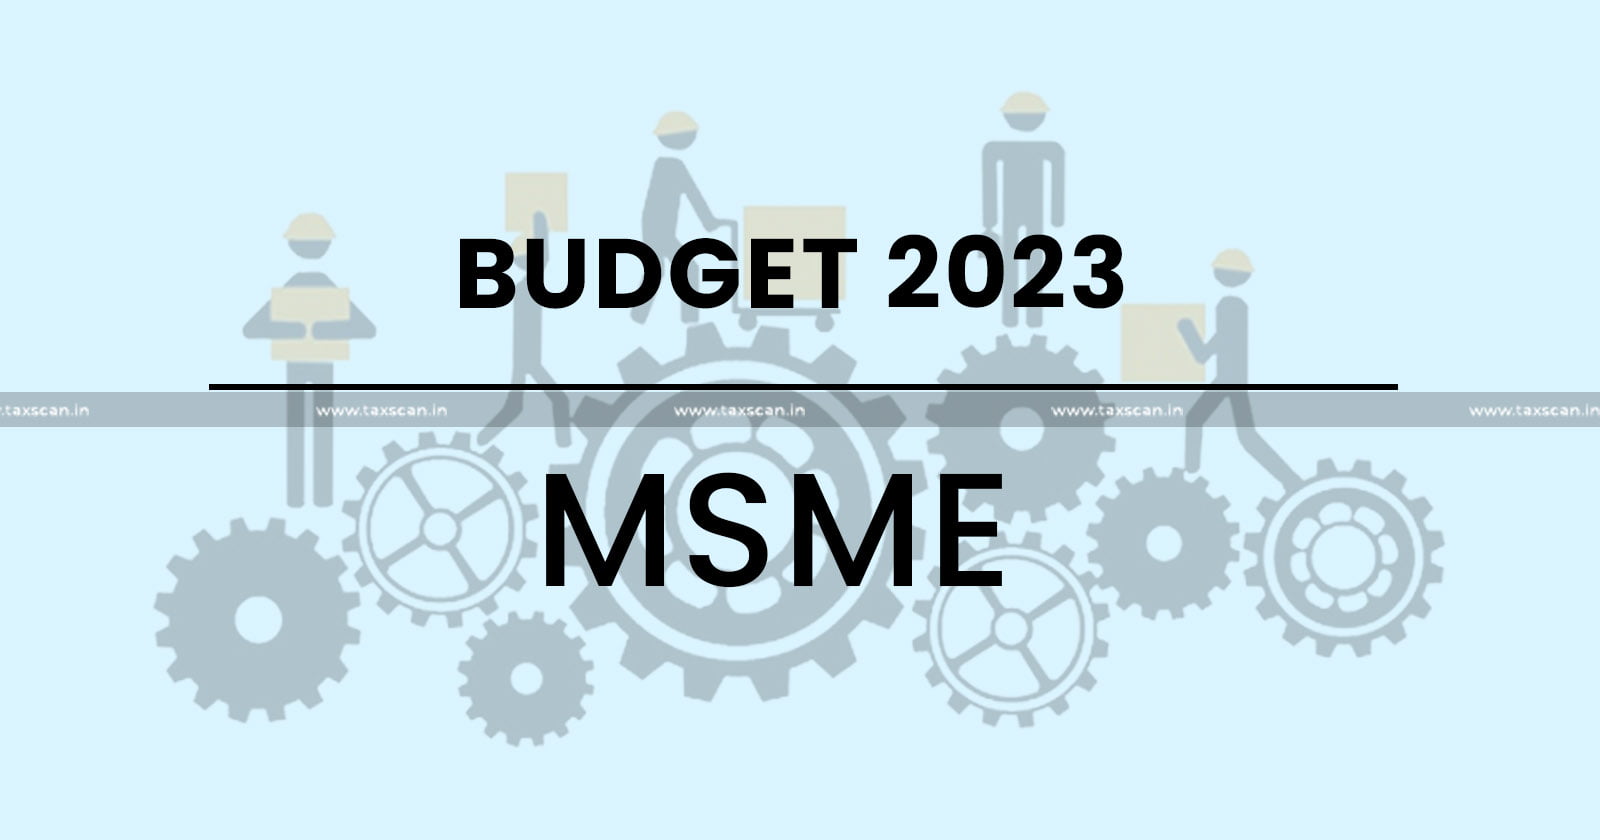 Budget 2023 - MSMEs expect - MSMEs - Budget - budget 2023 live - union budget 2023 - nirmala sitharaman budget - nirmala sitharaman union budget - nirmala sitharaman - budget 2023 india - union budget 2023 live - budget of india 2023 - financial budget of india 2023 - budget 2023 news - taxscan